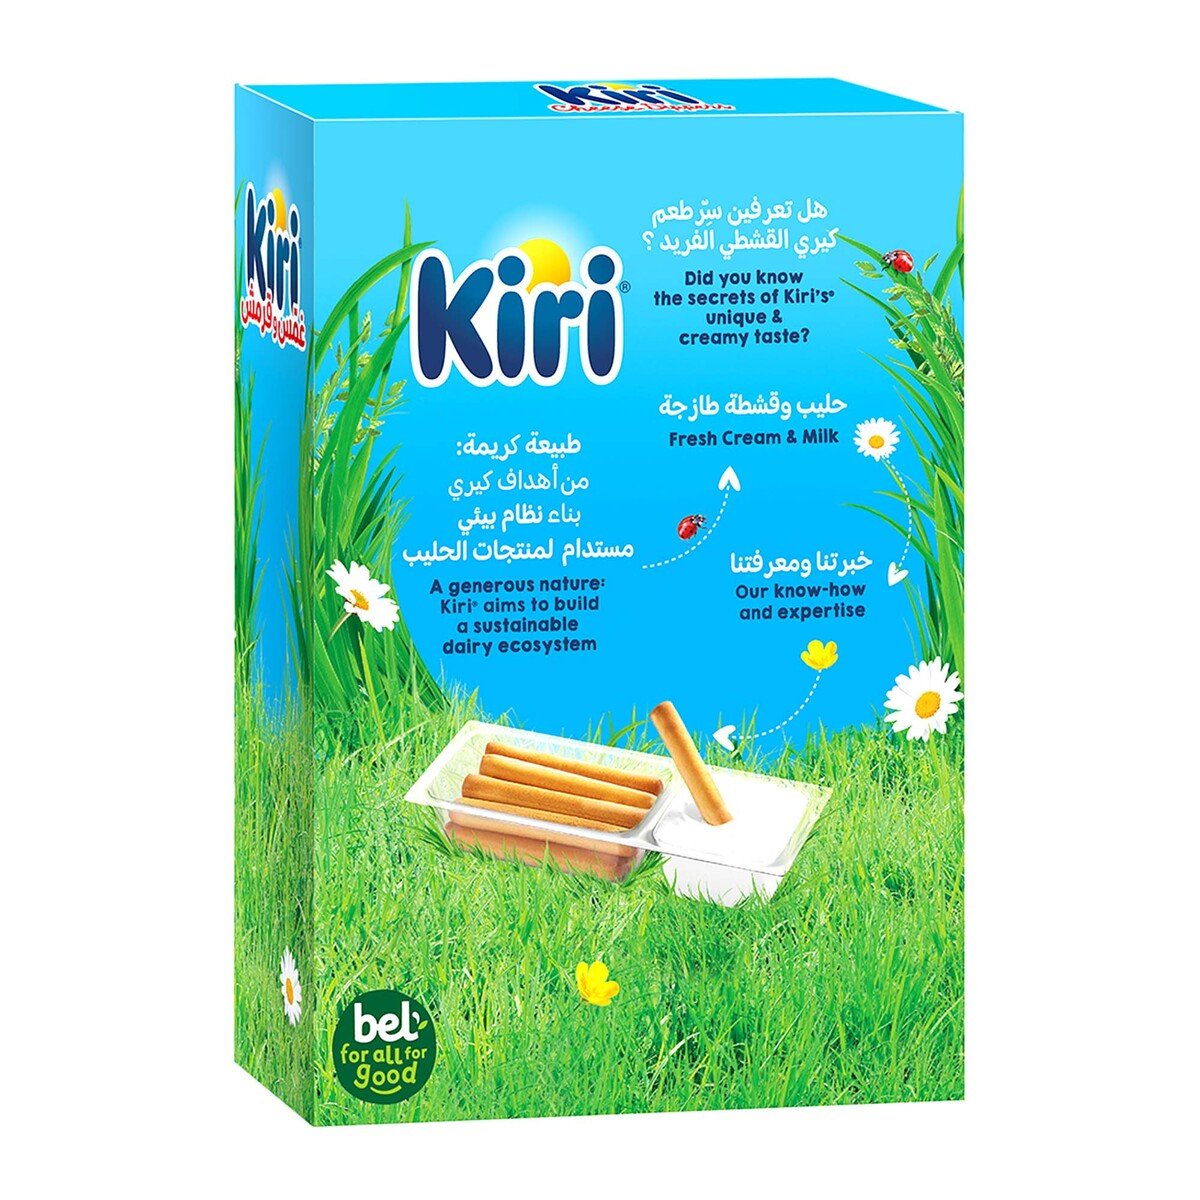 Kiri Dip & Crunch Cream Cheese and Breadstick Snack 8 x 35 g